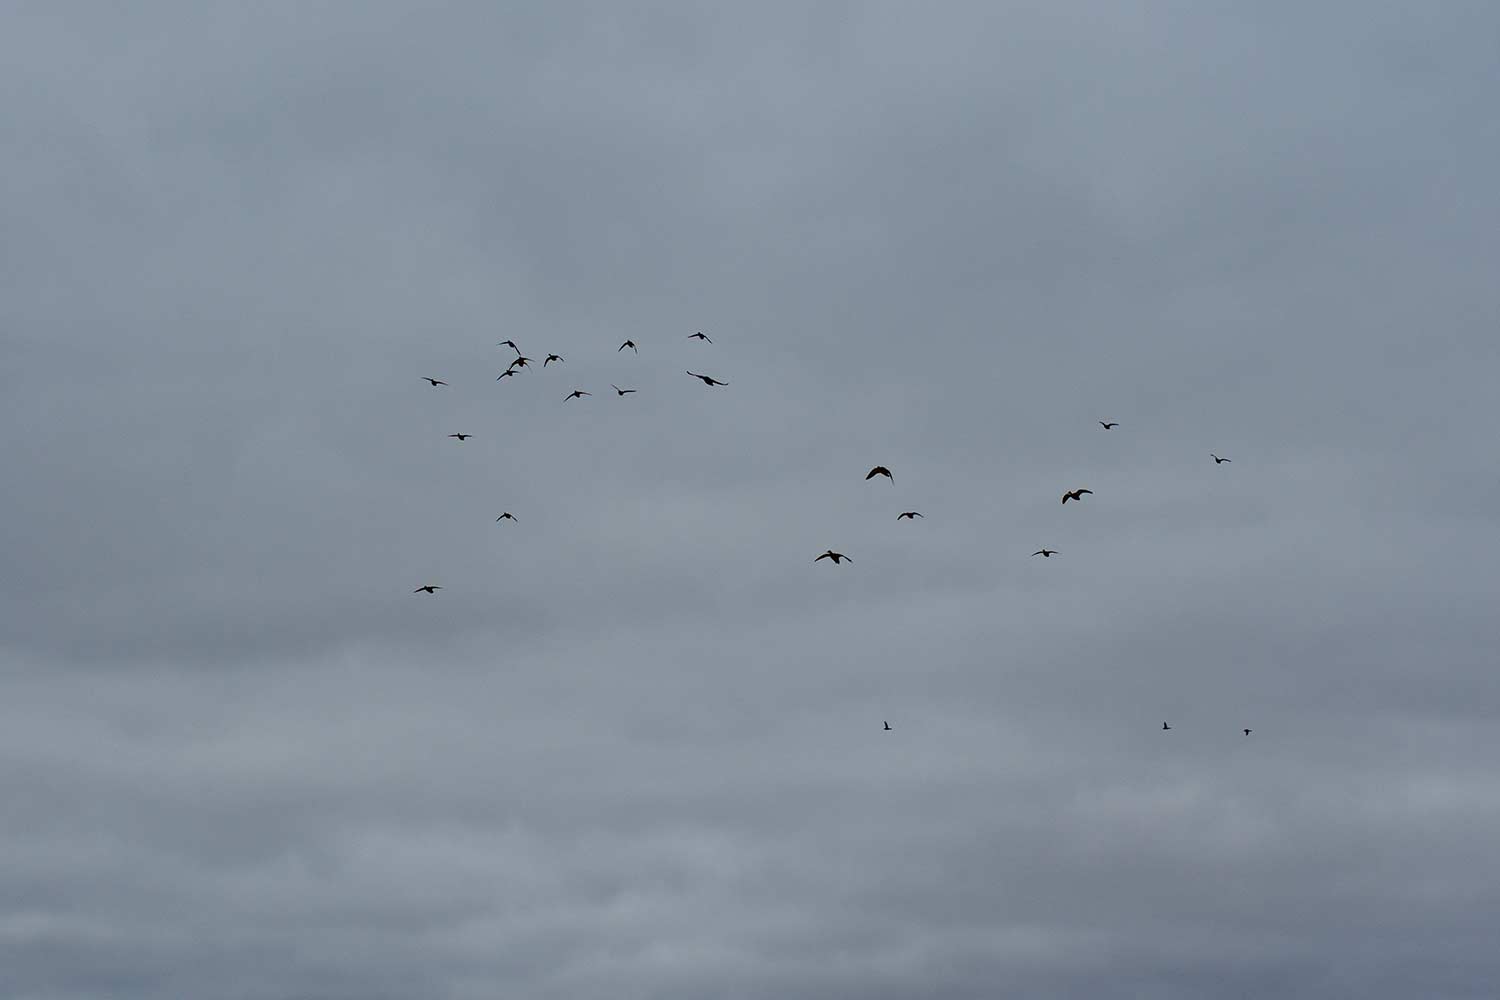 a flock of ducks flying in an overcast sky.